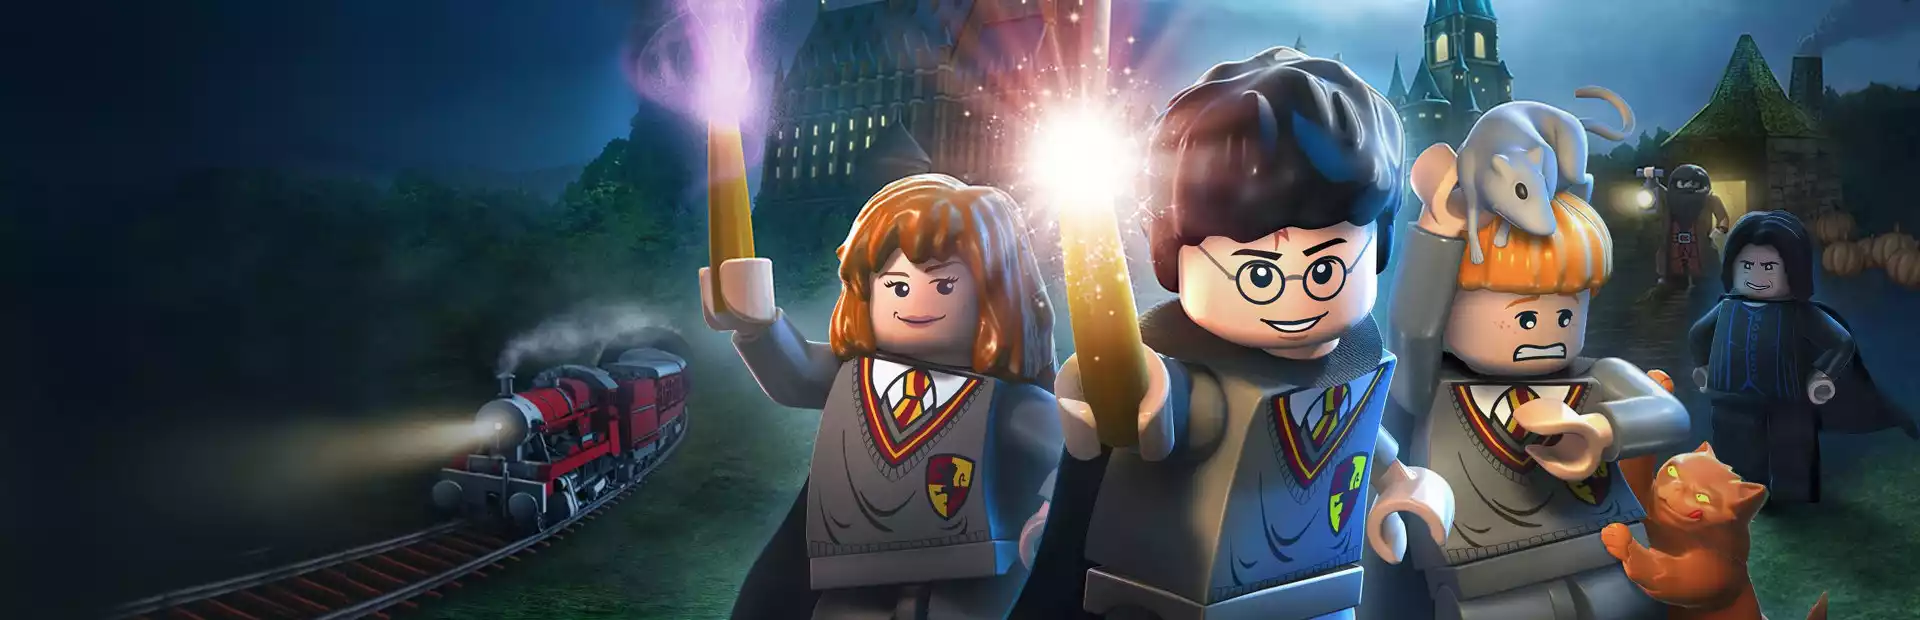 LEGO Harry Potter:Years 1-4 Steam Key GLOBAL